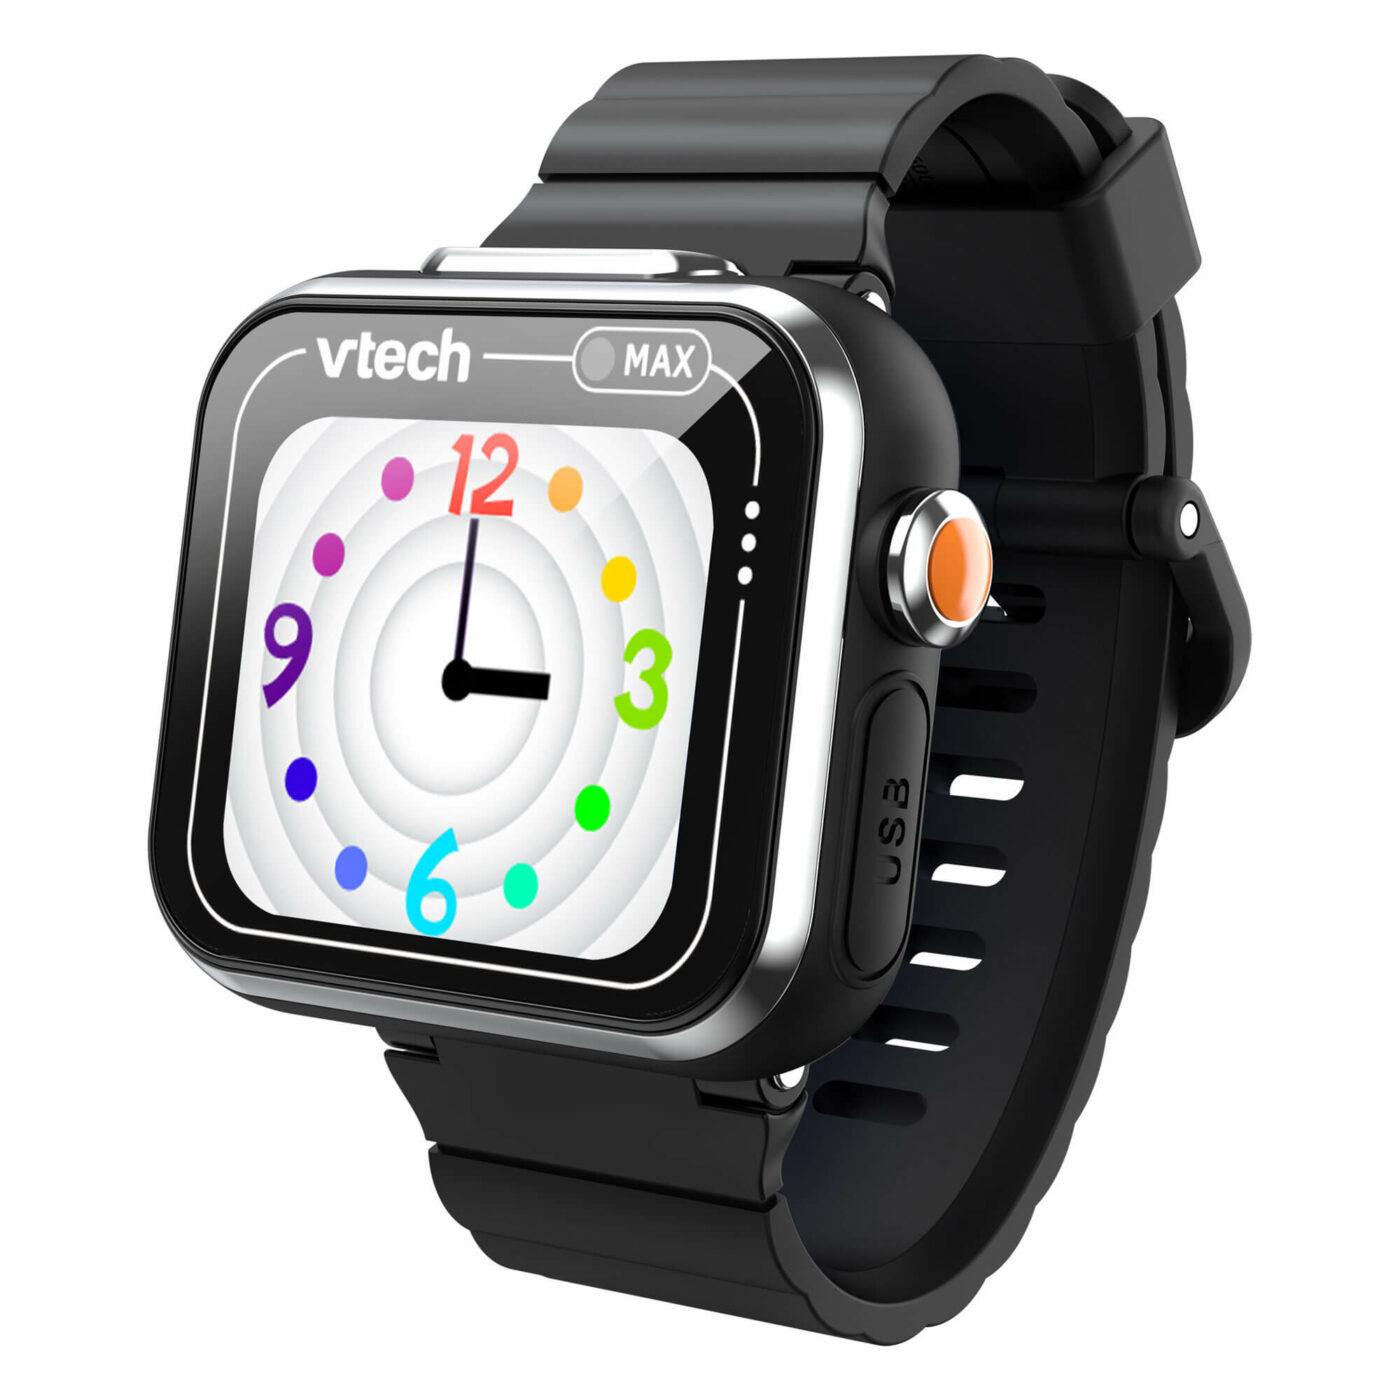 Vtech - Kidizoom Smart Watch Max - Black